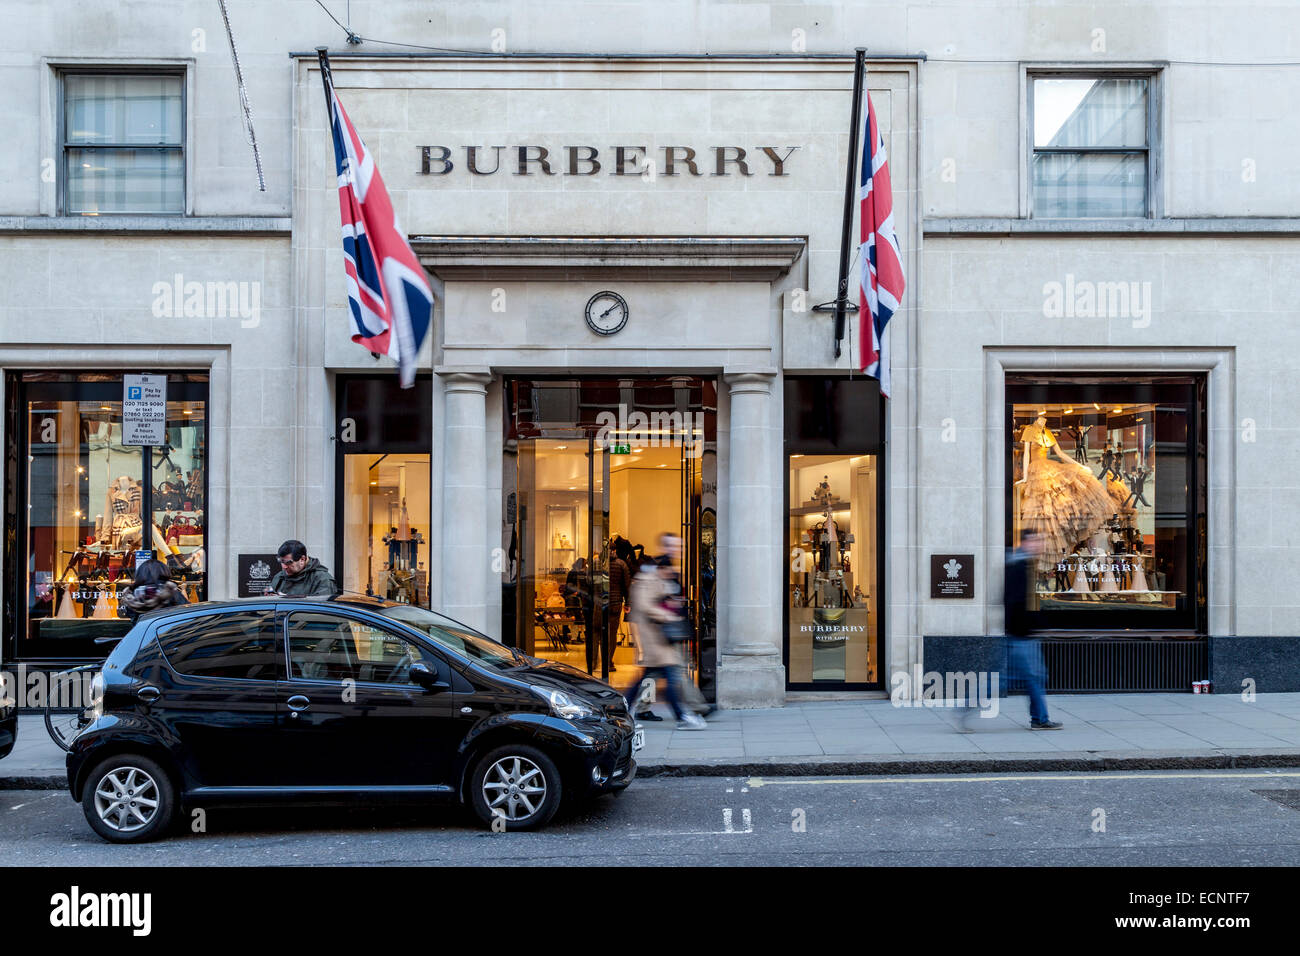 Actualizar 56+ imagen burberry store london - Abzlocal.mx